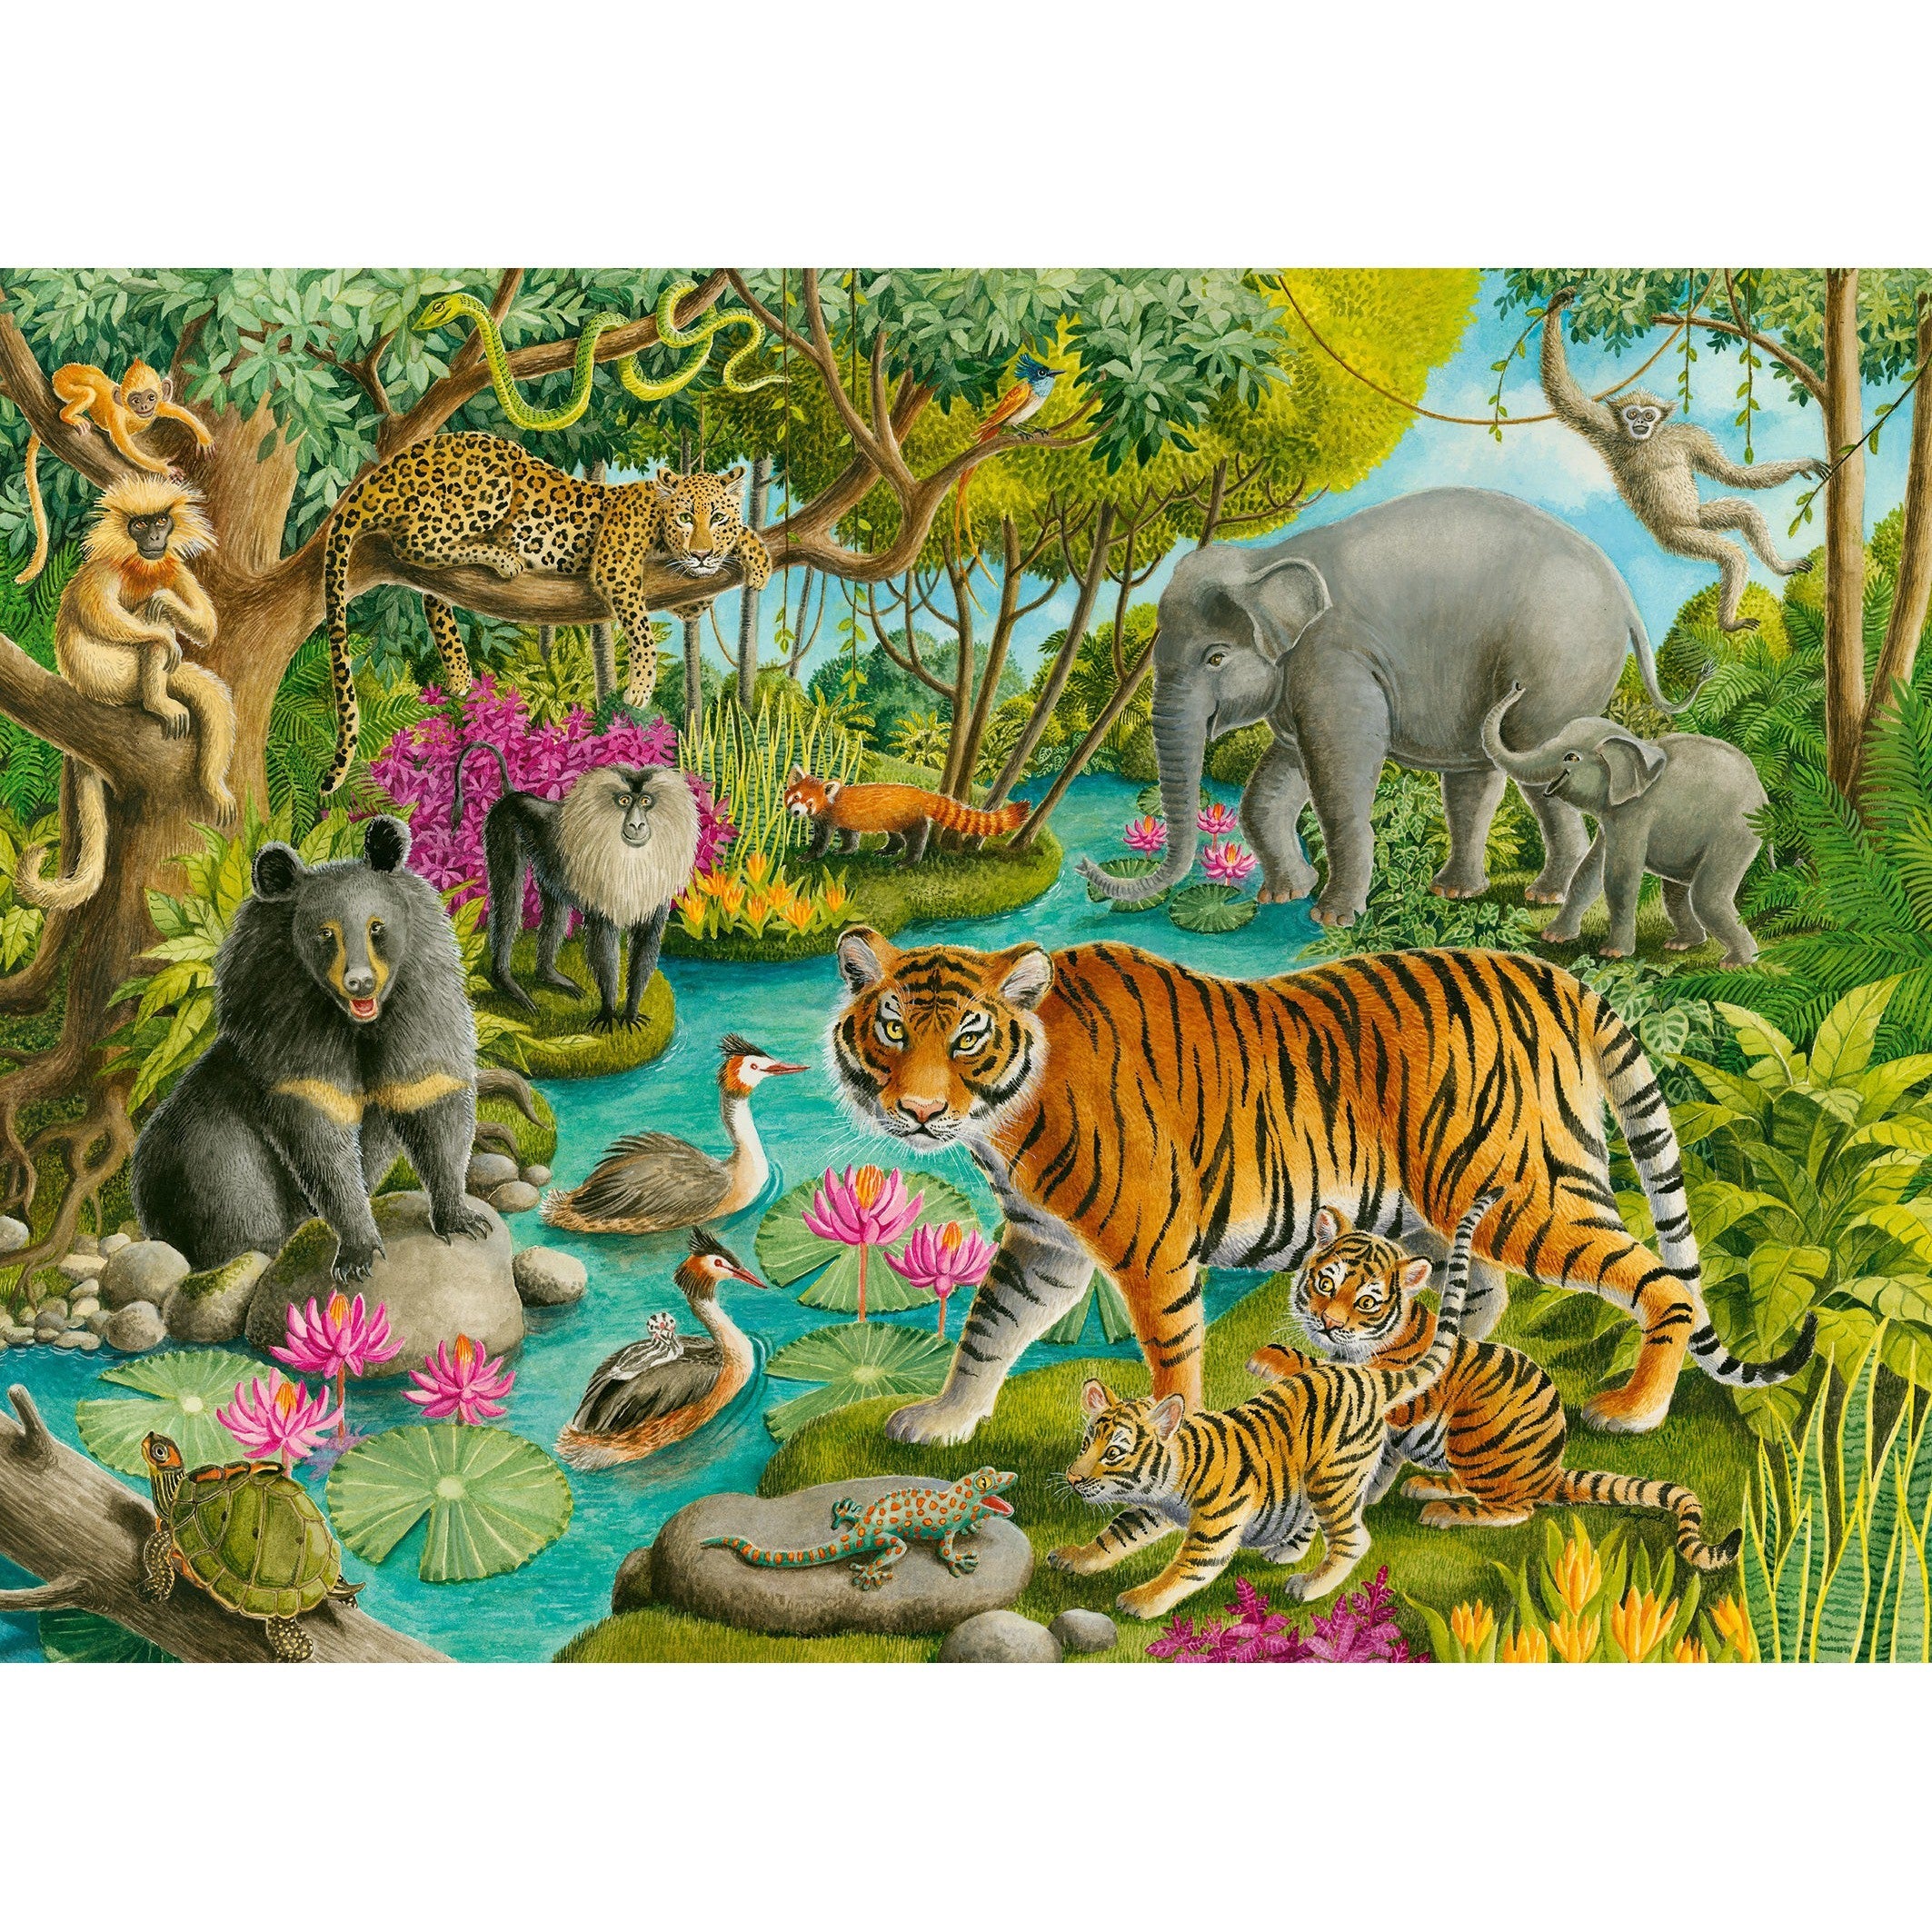 Ravensburger Animals of India 60 Piece Puzzle-RAVENSBURGER-Little Giant Kidz